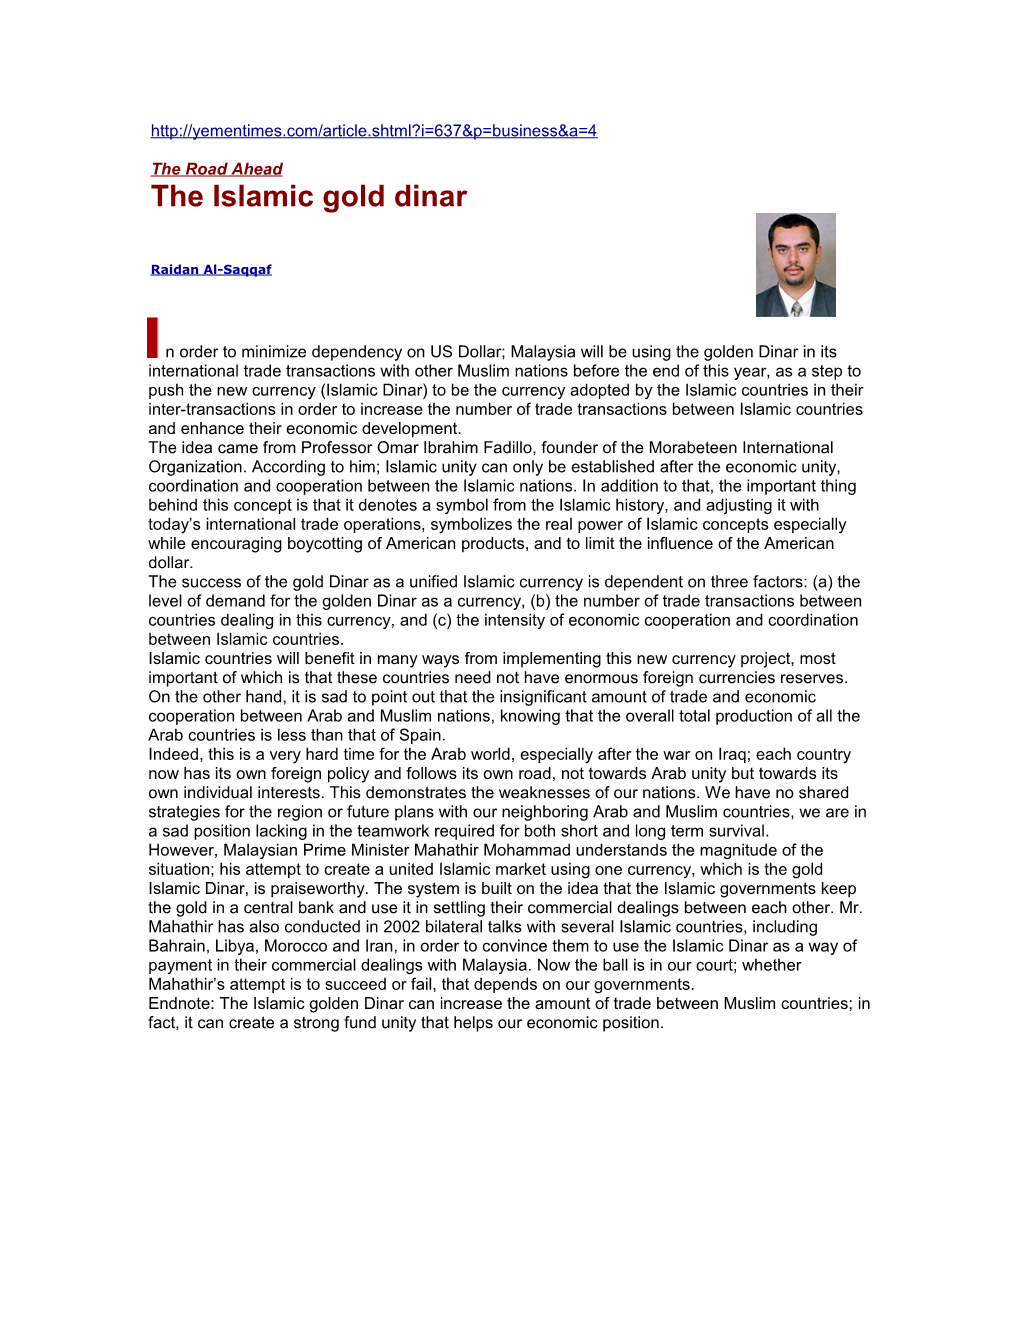 The Road Ahead the Islamic Gold Dinar